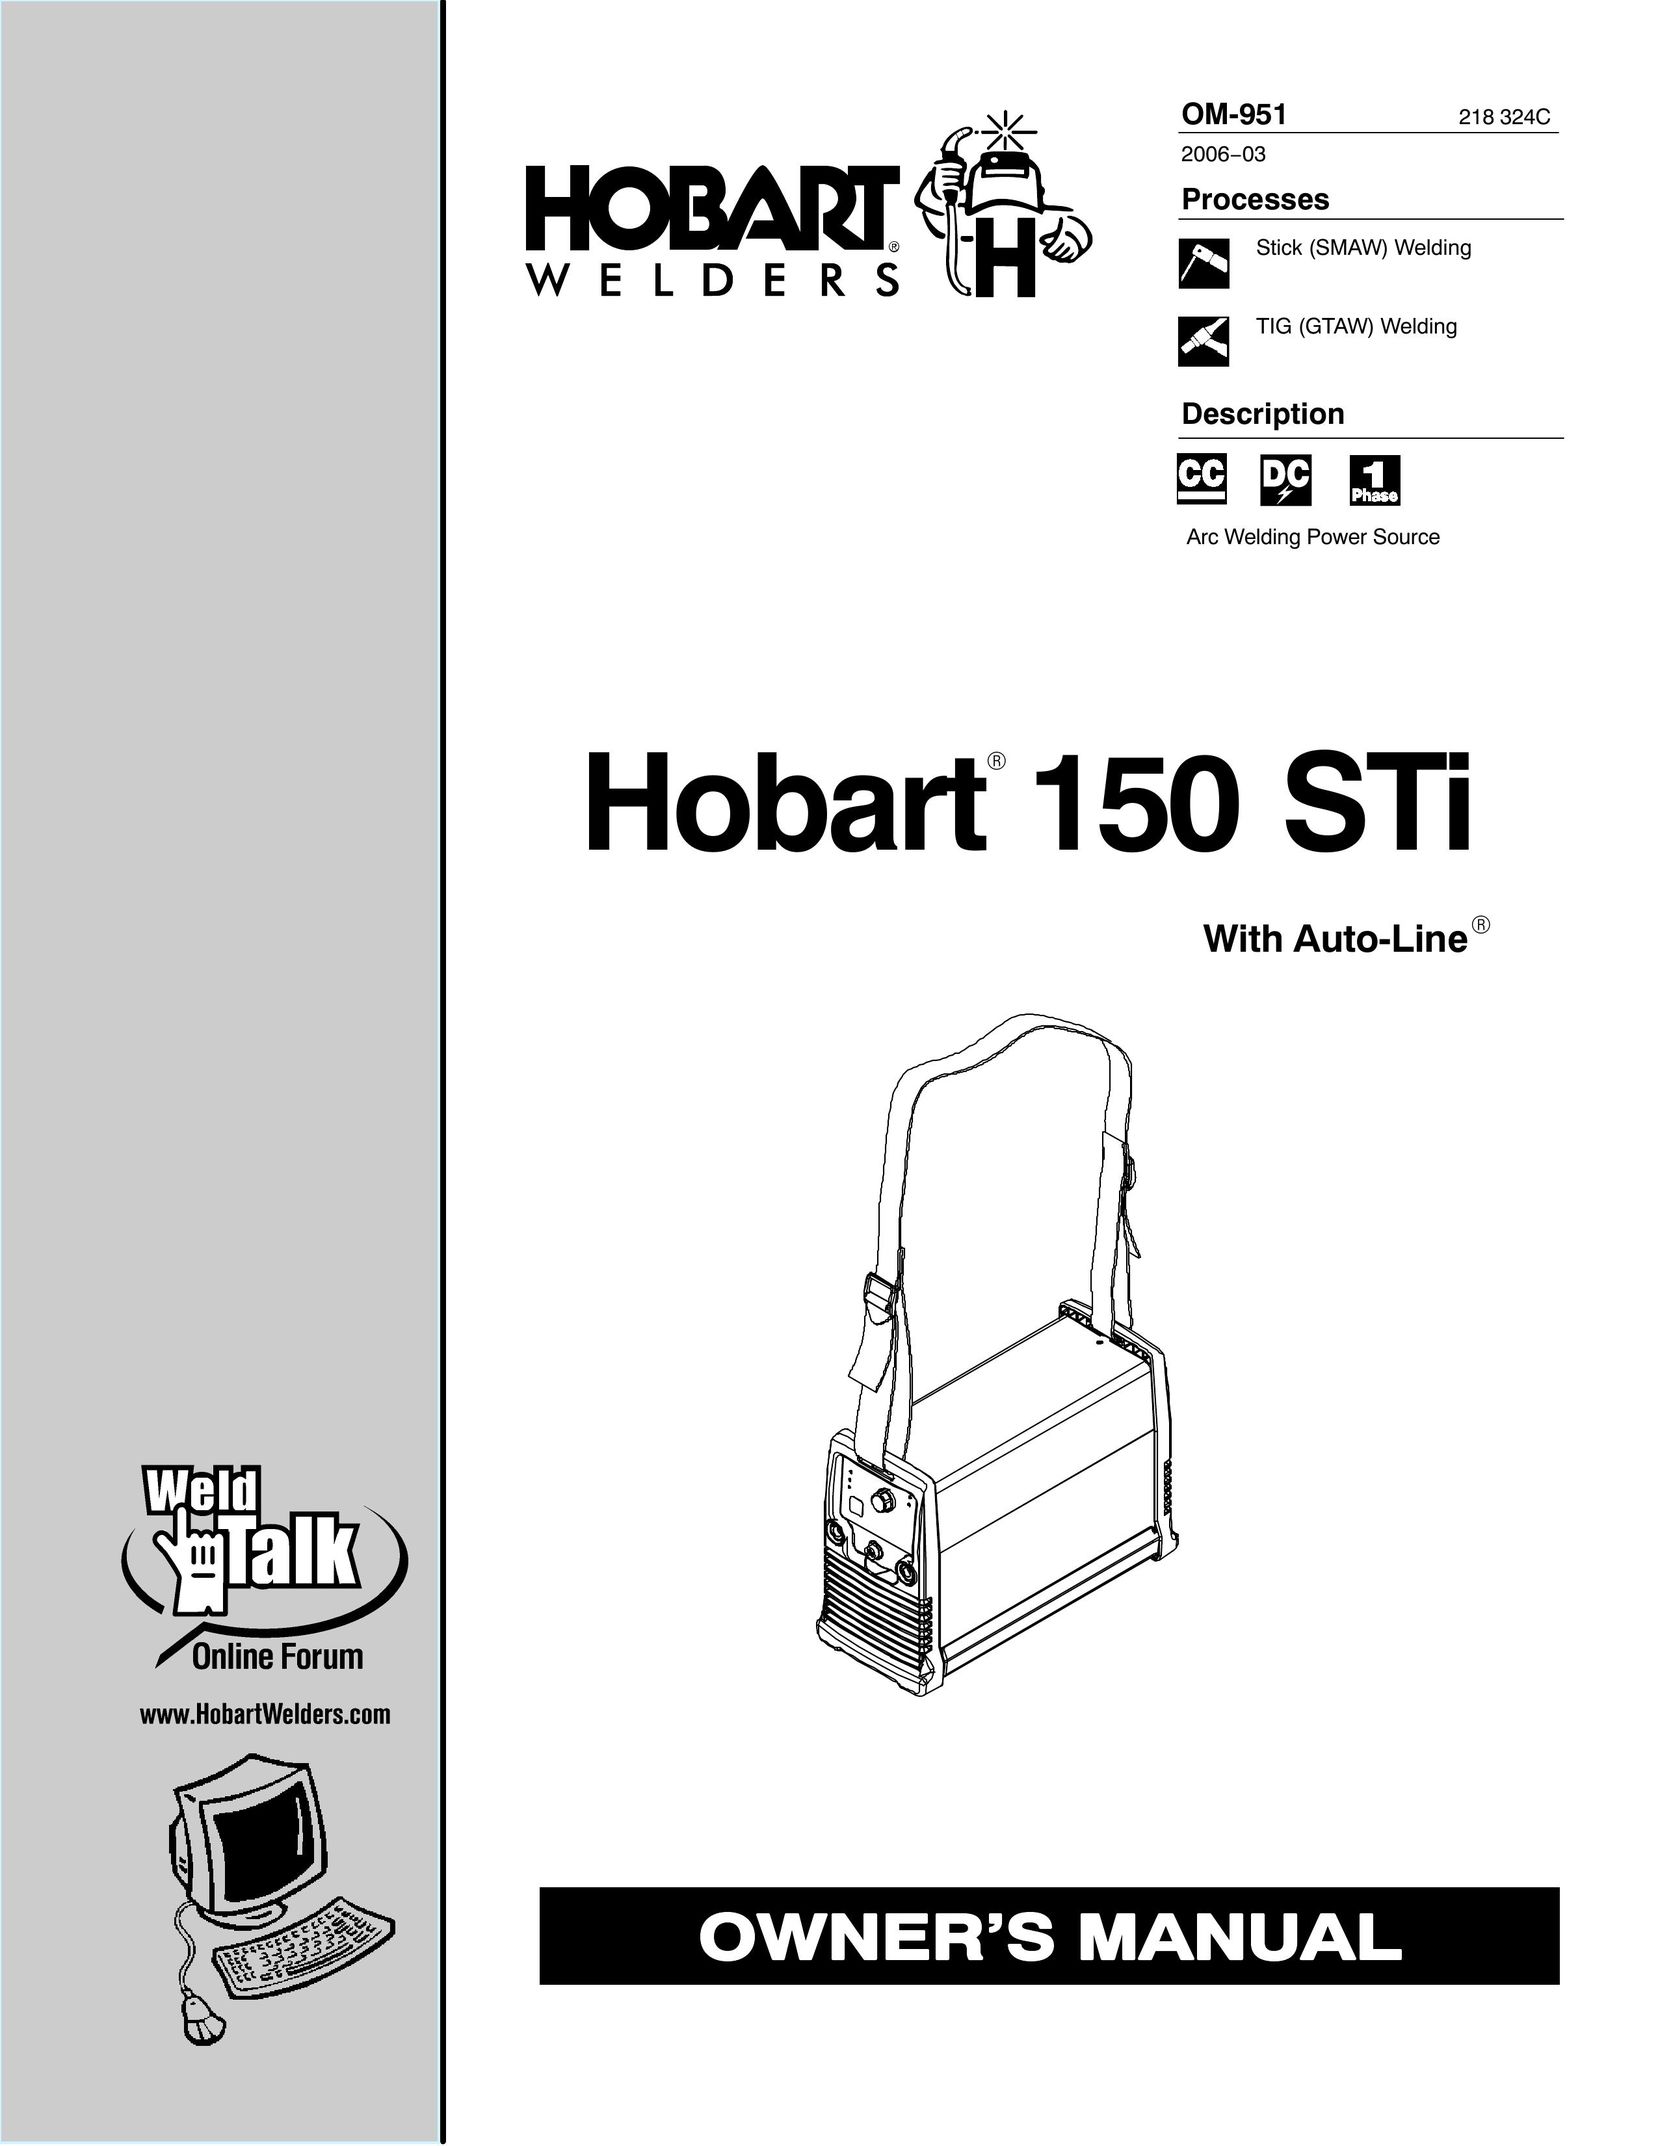 Hobart Welding Products 150 STI Welder User Manual